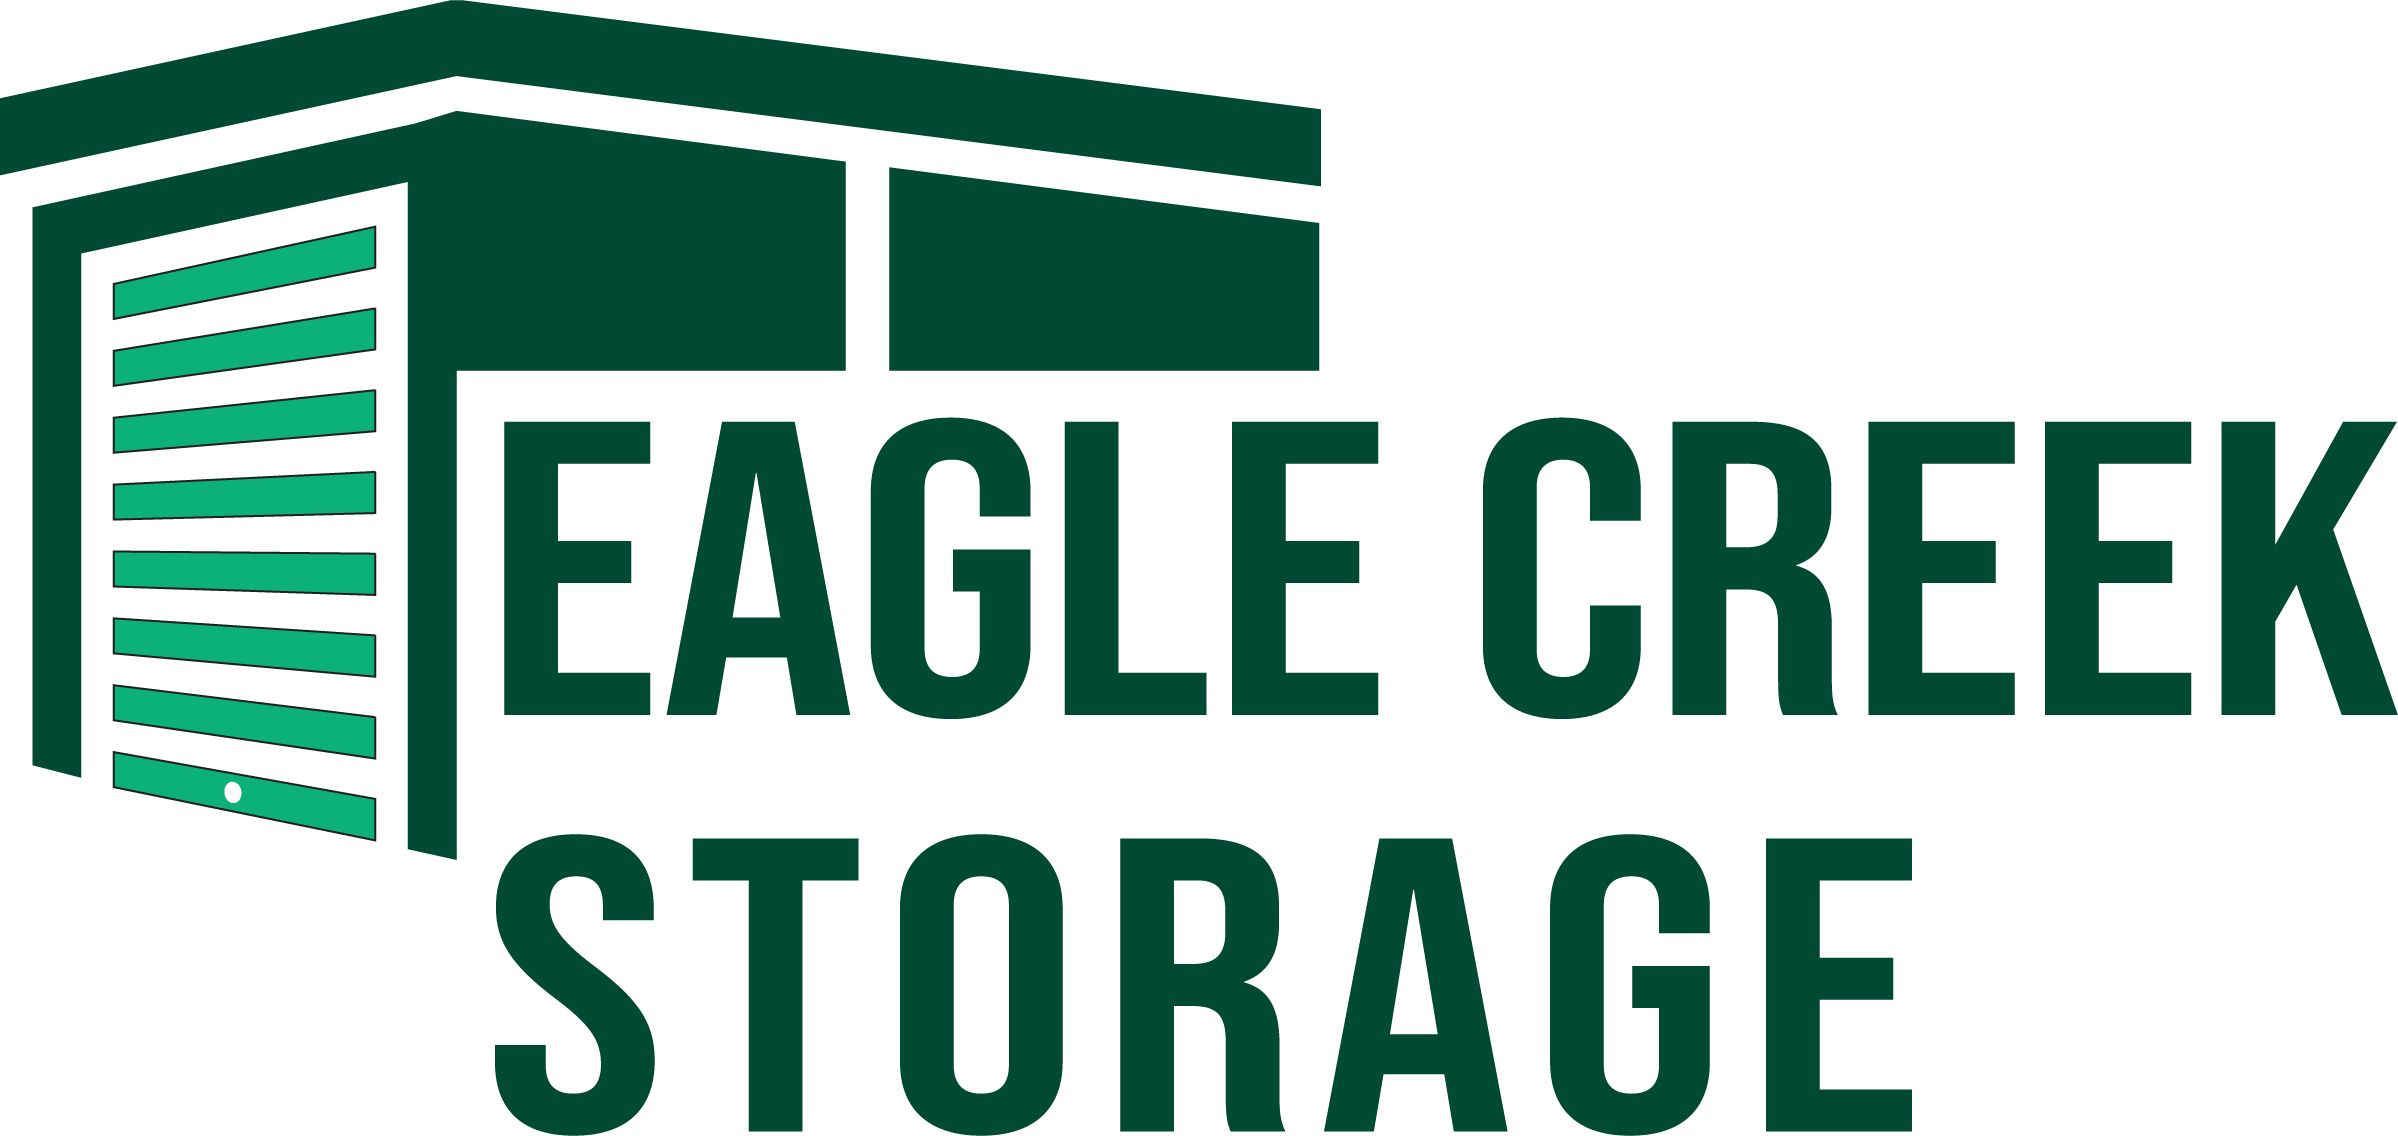 Eagle Creek Storage